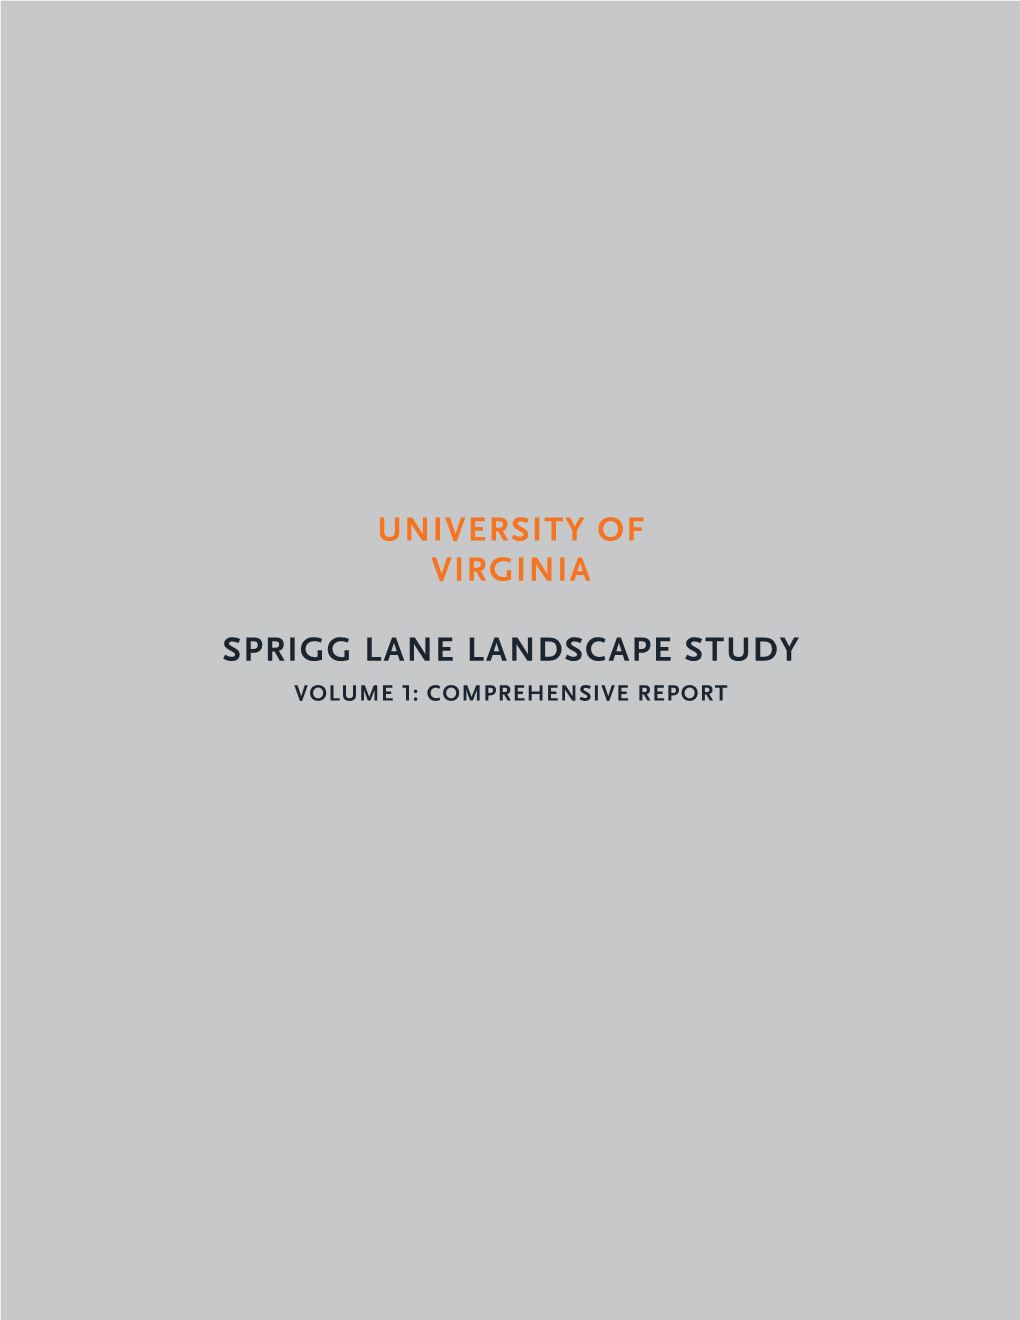 Sprigg Lane Landscape Study (2020)